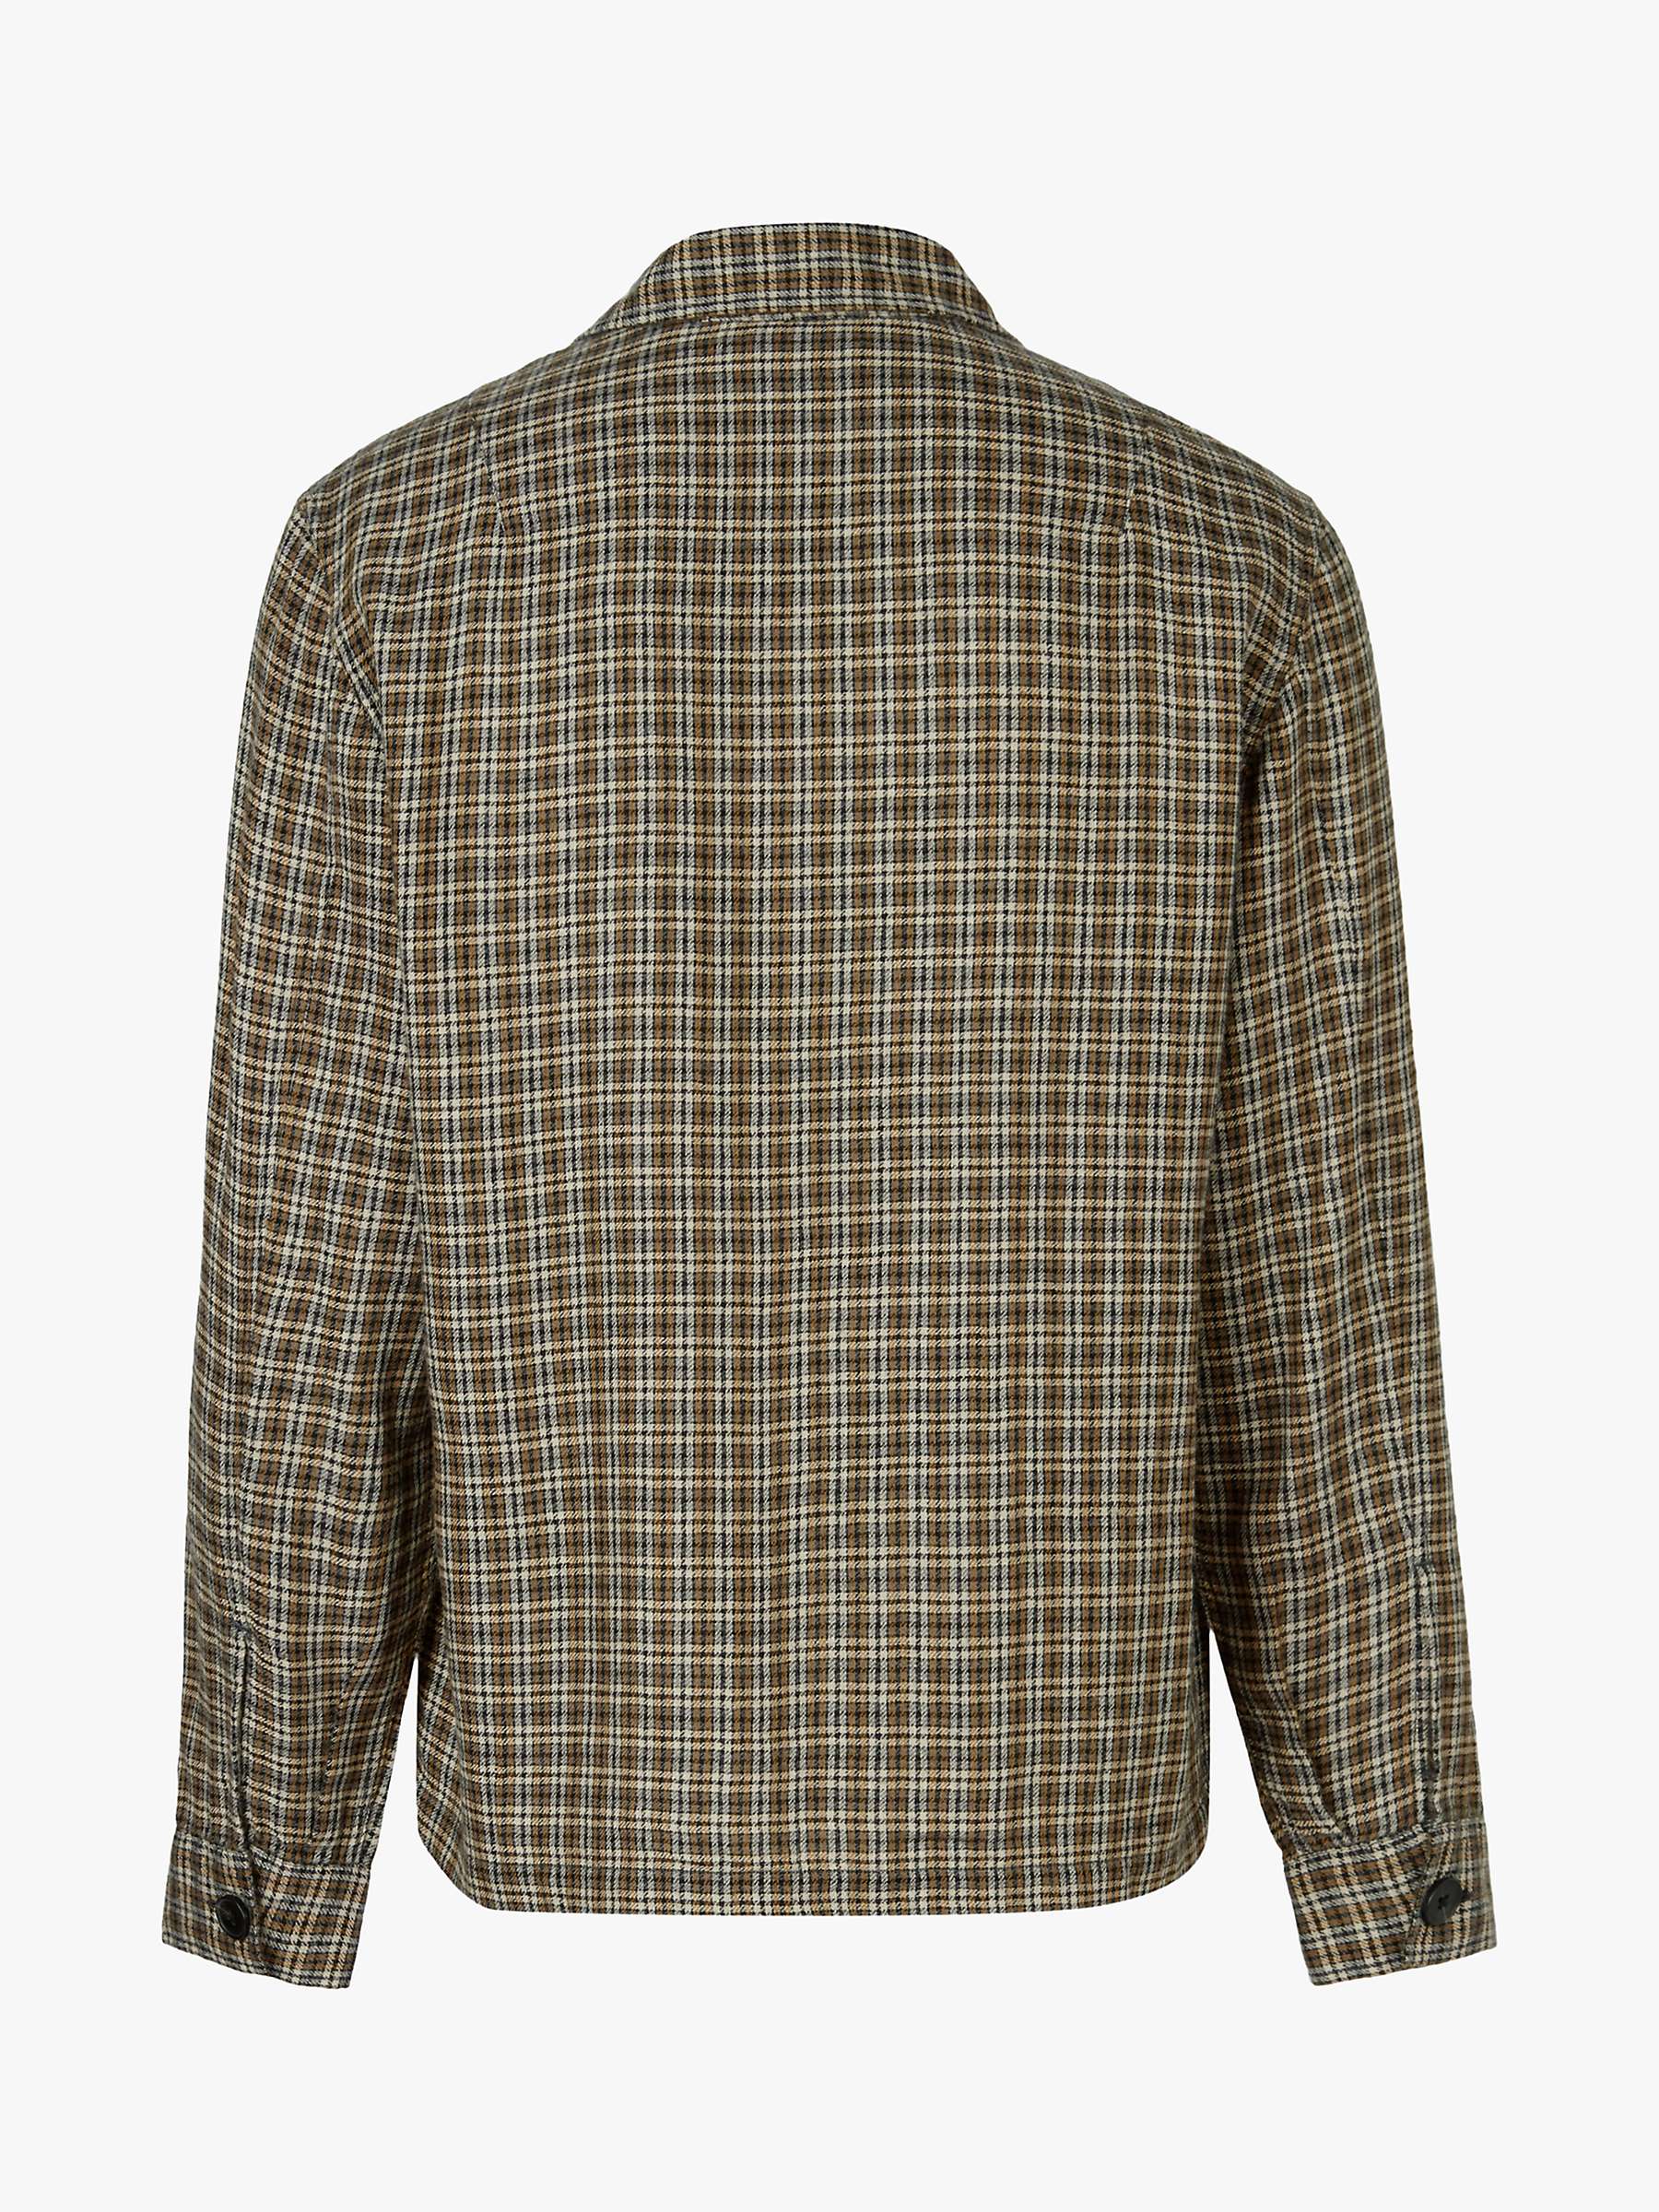 Buy AllSaints Nate Nievo Long Sleeve Check Shirt, Grey/Mustard Online at johnlewis.com